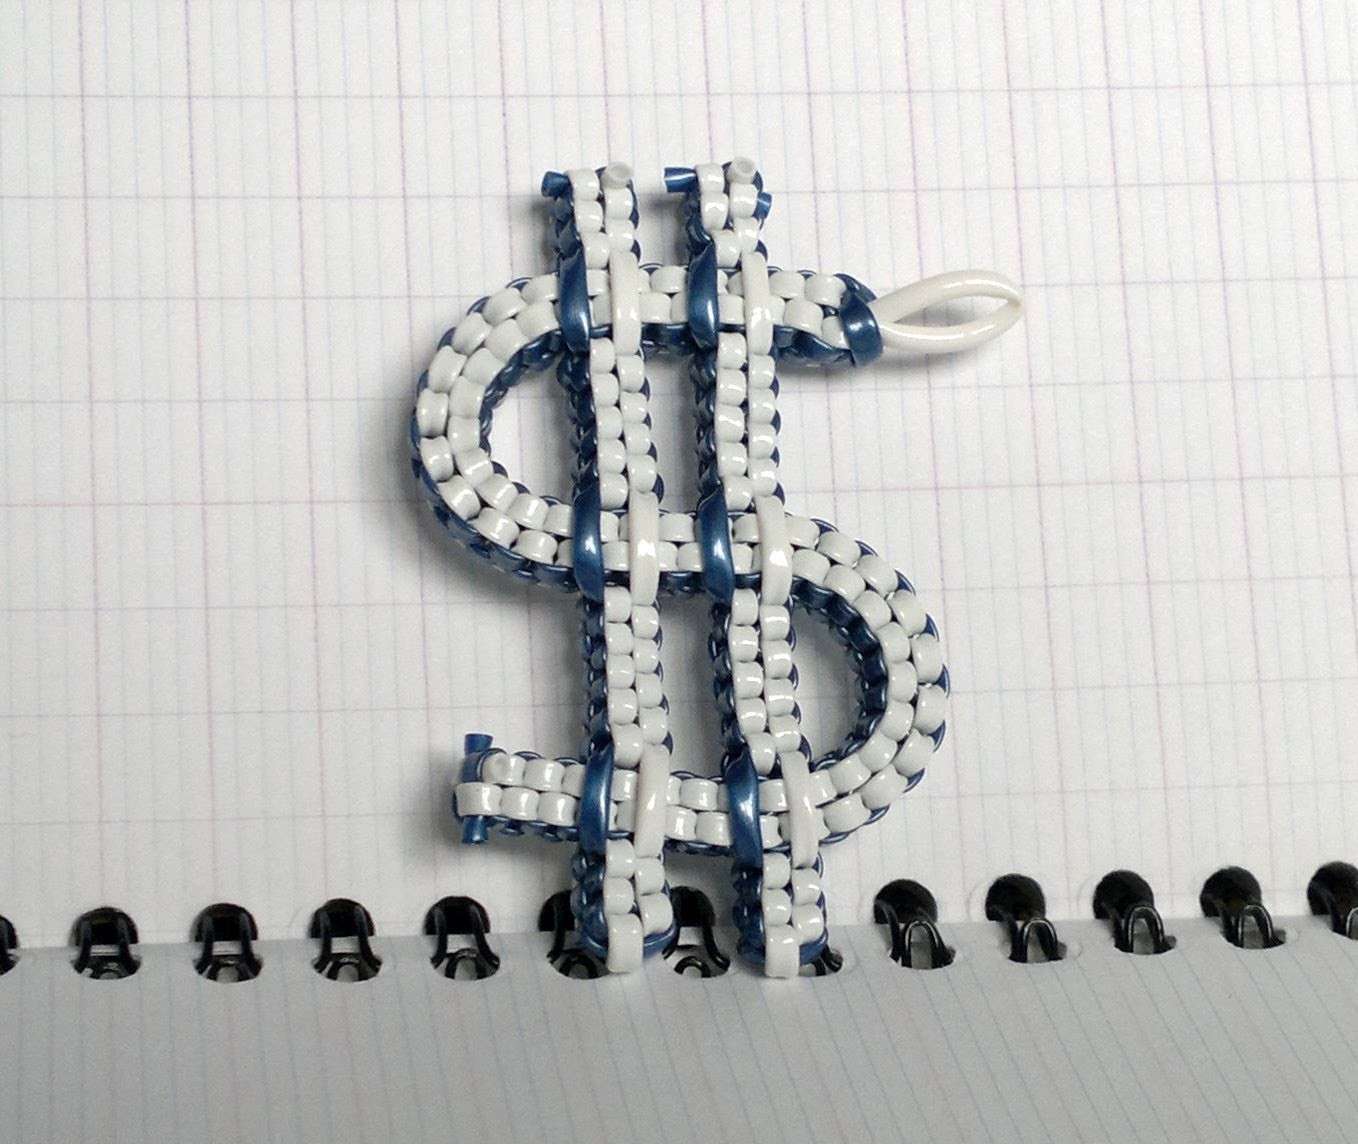 Simbolo del dollaro